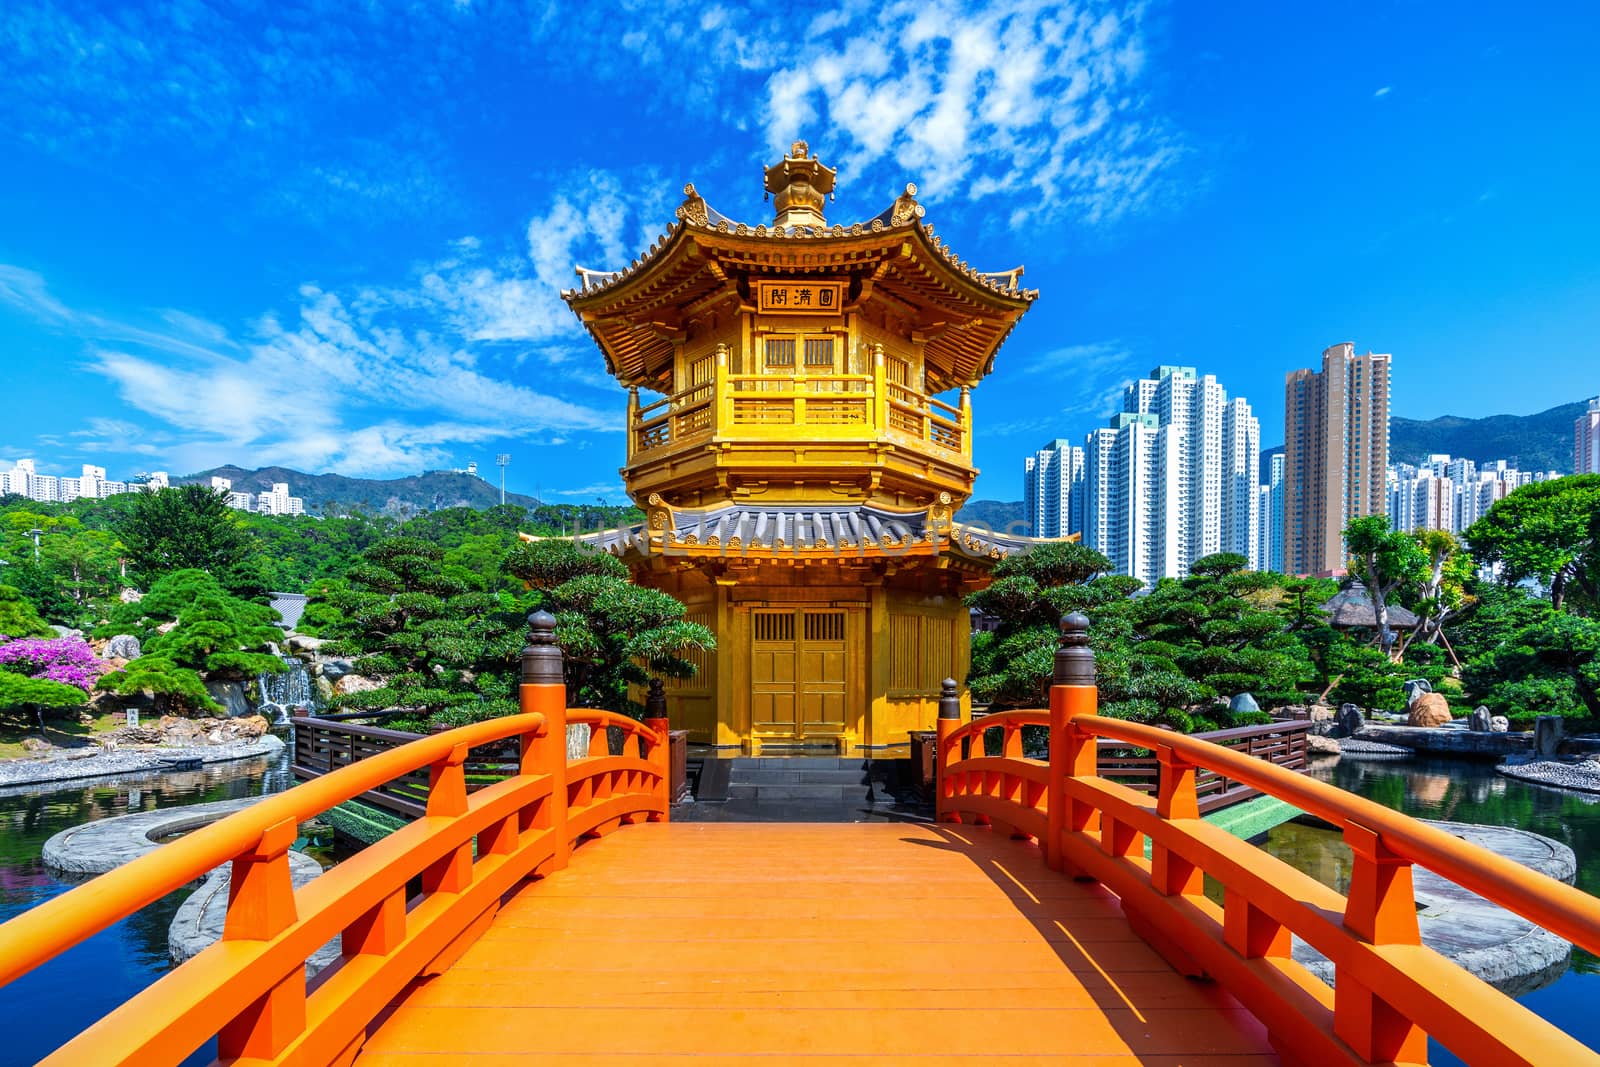 Golden Pavilion in Nan Lian Garden near Chi Lin Nunnery temple, Hong Kong. by gutarphotoghaphy